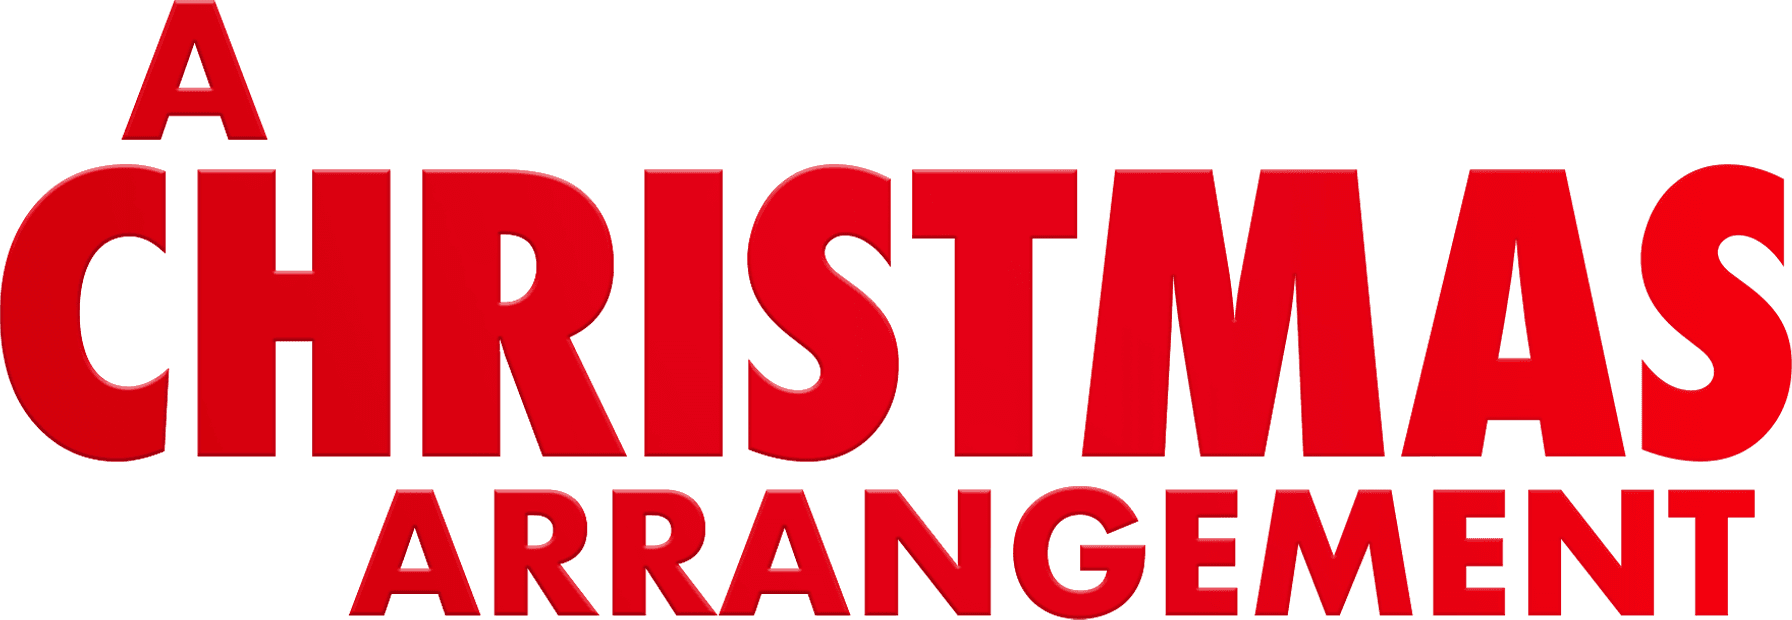 A Christmas Arrangement logo